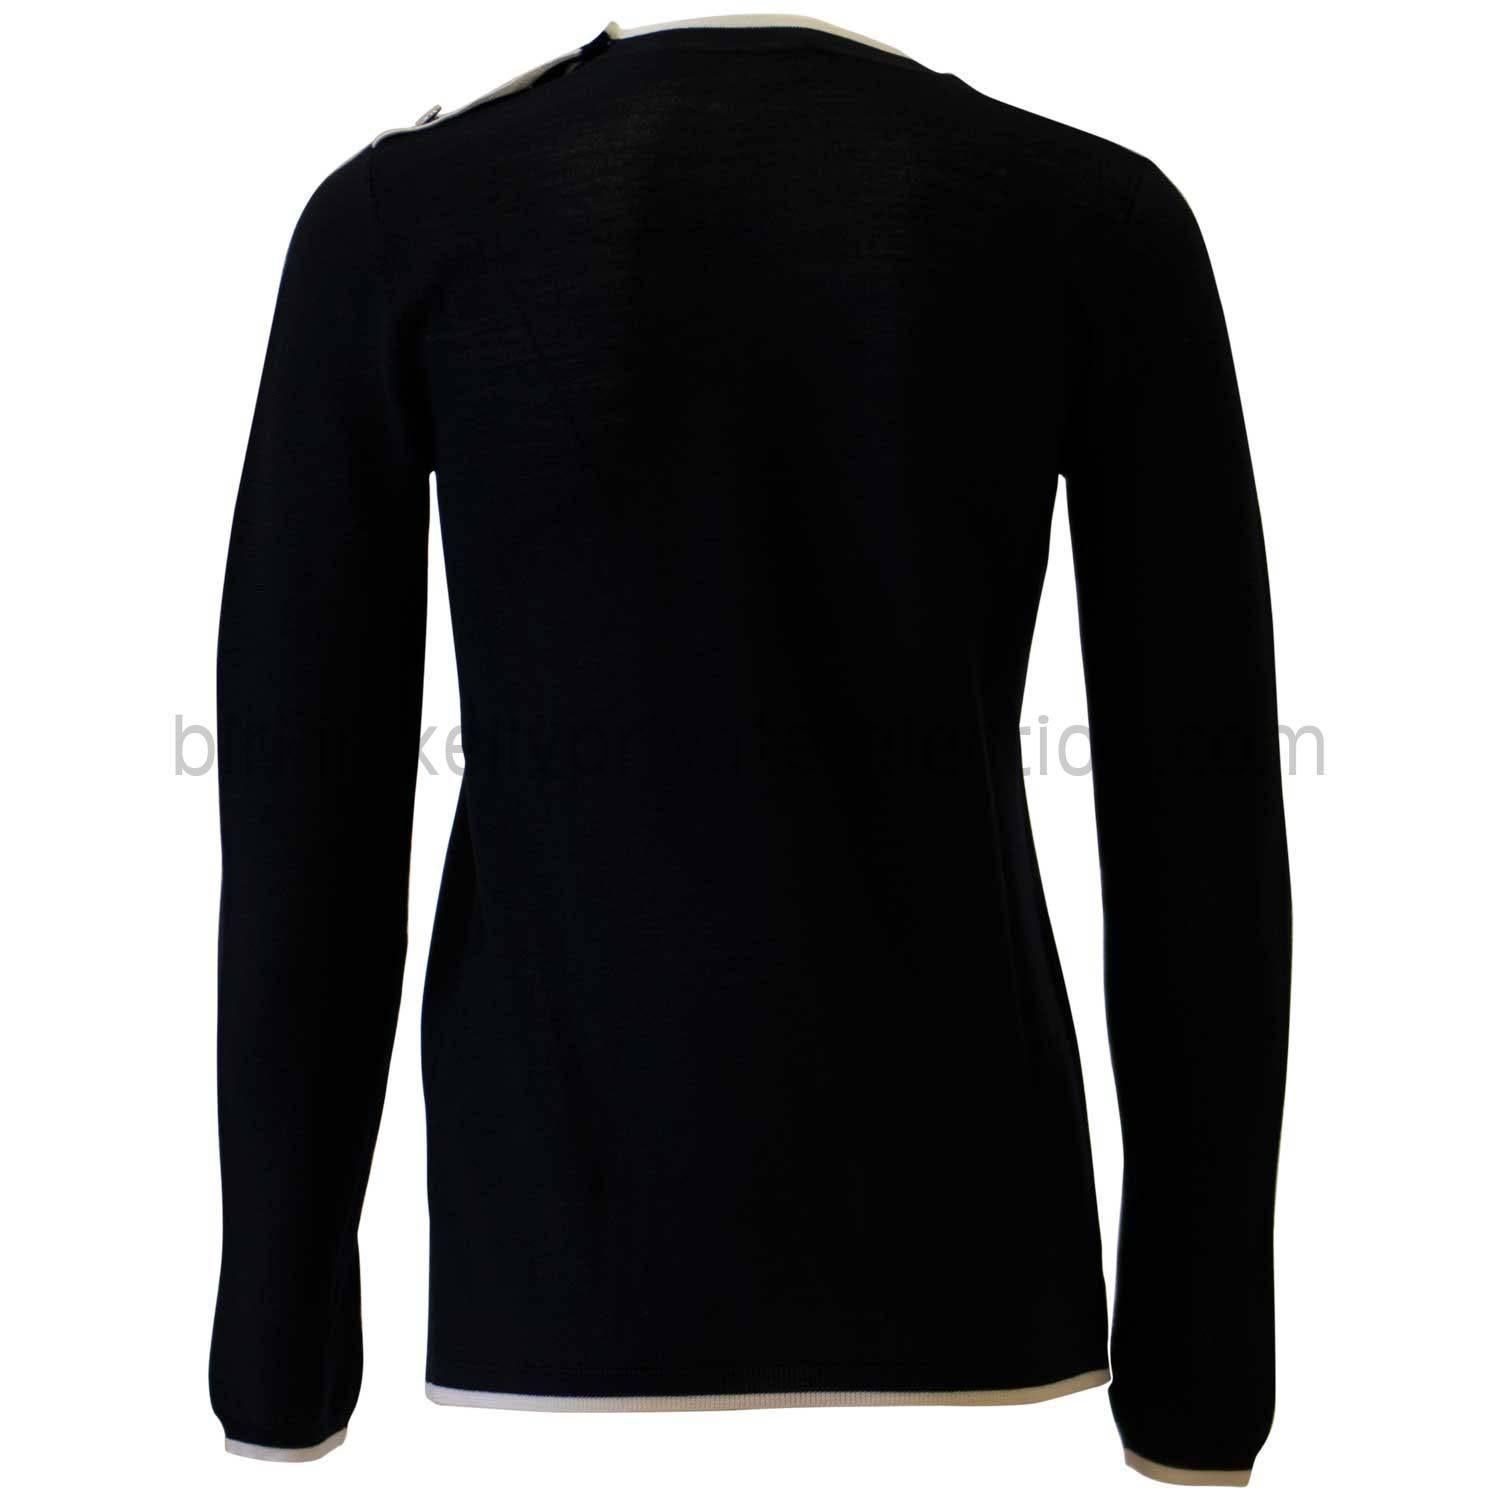 HERMES Sweater 36  JEUX DE POINTS MERINOS Navy Blue 2015

Pre-owned and never used.

Bought it in Hermes store in 2015.

Composition; 100% Cotton.

Size; 36.

Color; BLEU NOIR.

Model; JEUX DE POINTS MERINOS.

Details:
*Protective